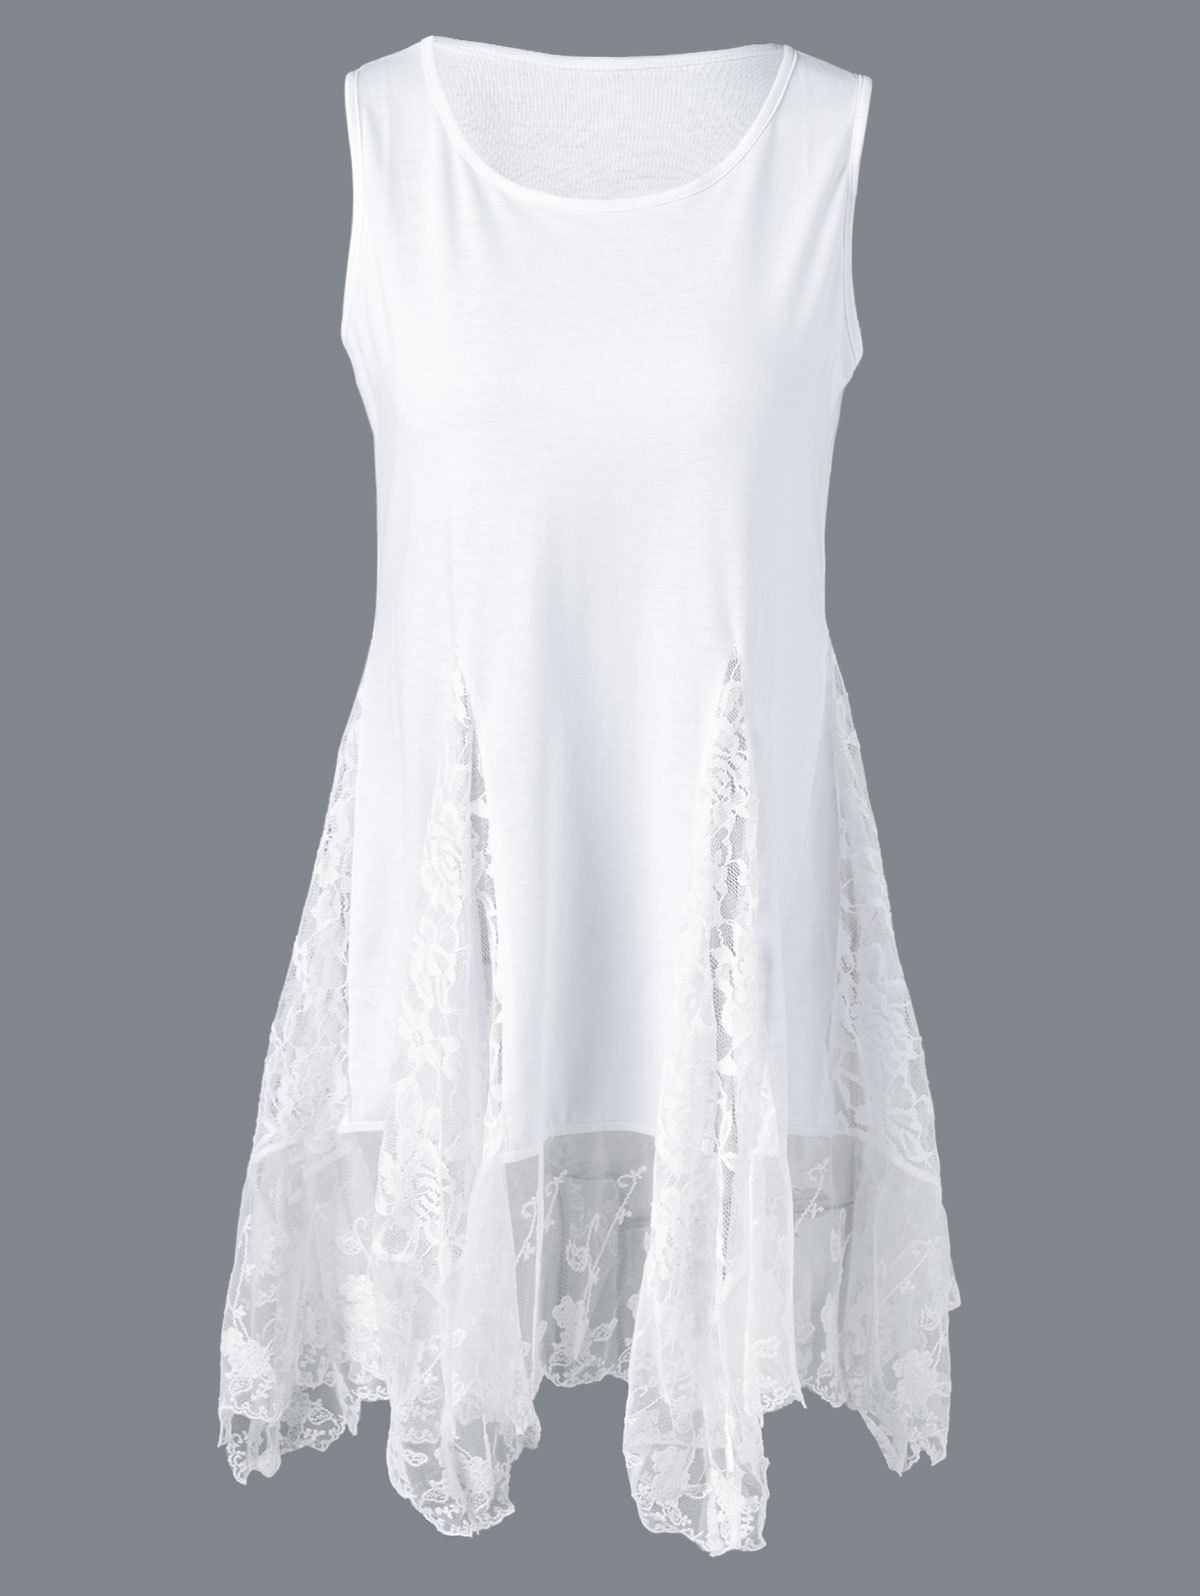 Lace Tank Dress, WHITE, XL in Casual Dresses | DressLily.com